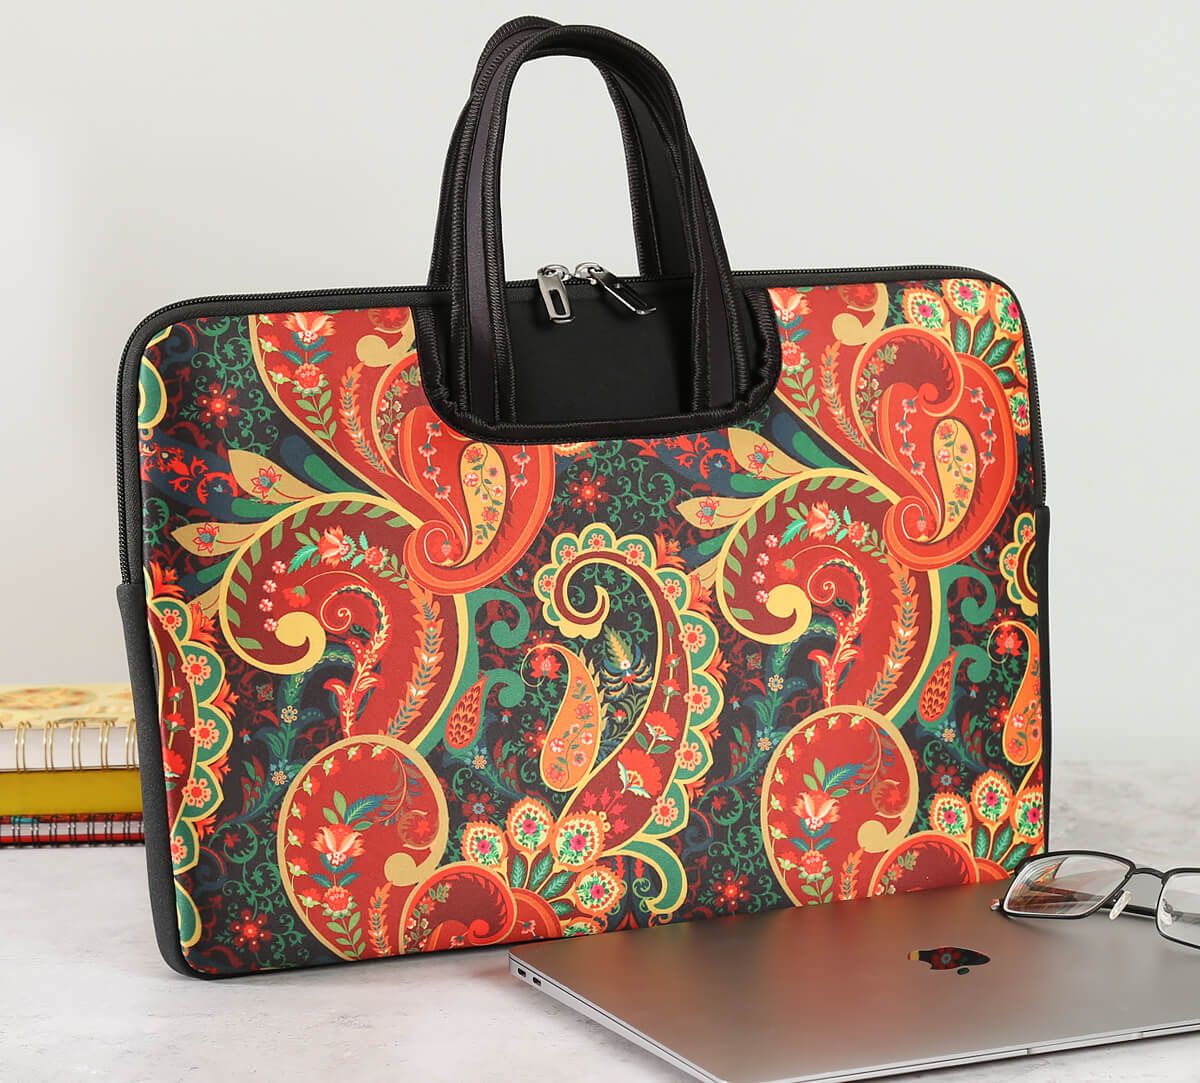 India Circus by Krsnaa Mehta Paisley Romance Laptop Sleeve Bag